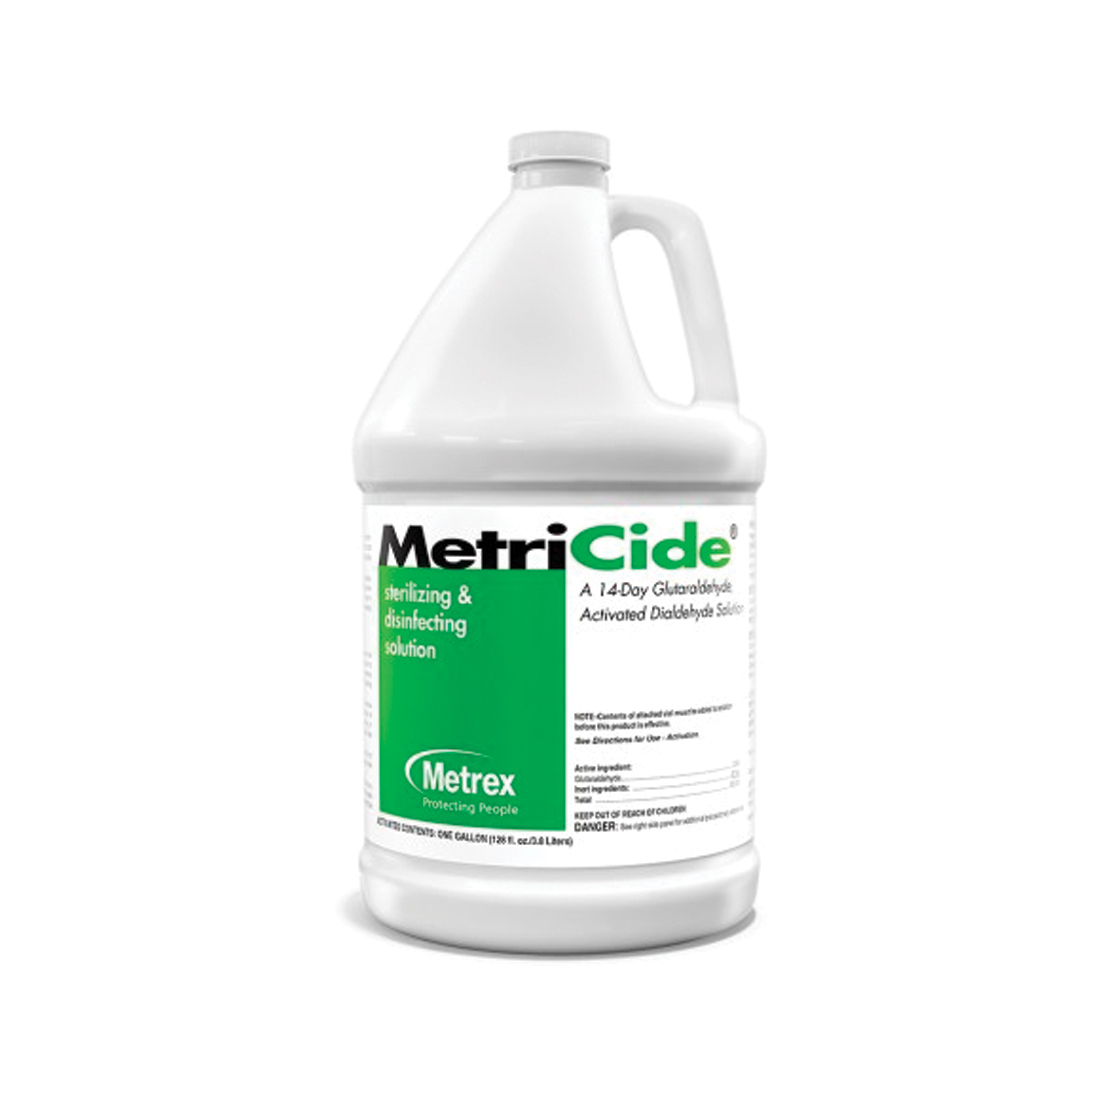 MetriCide® Glutaraldehyde Sterilizing & Disinfecting Solution, 14-Day, 1 Gallon